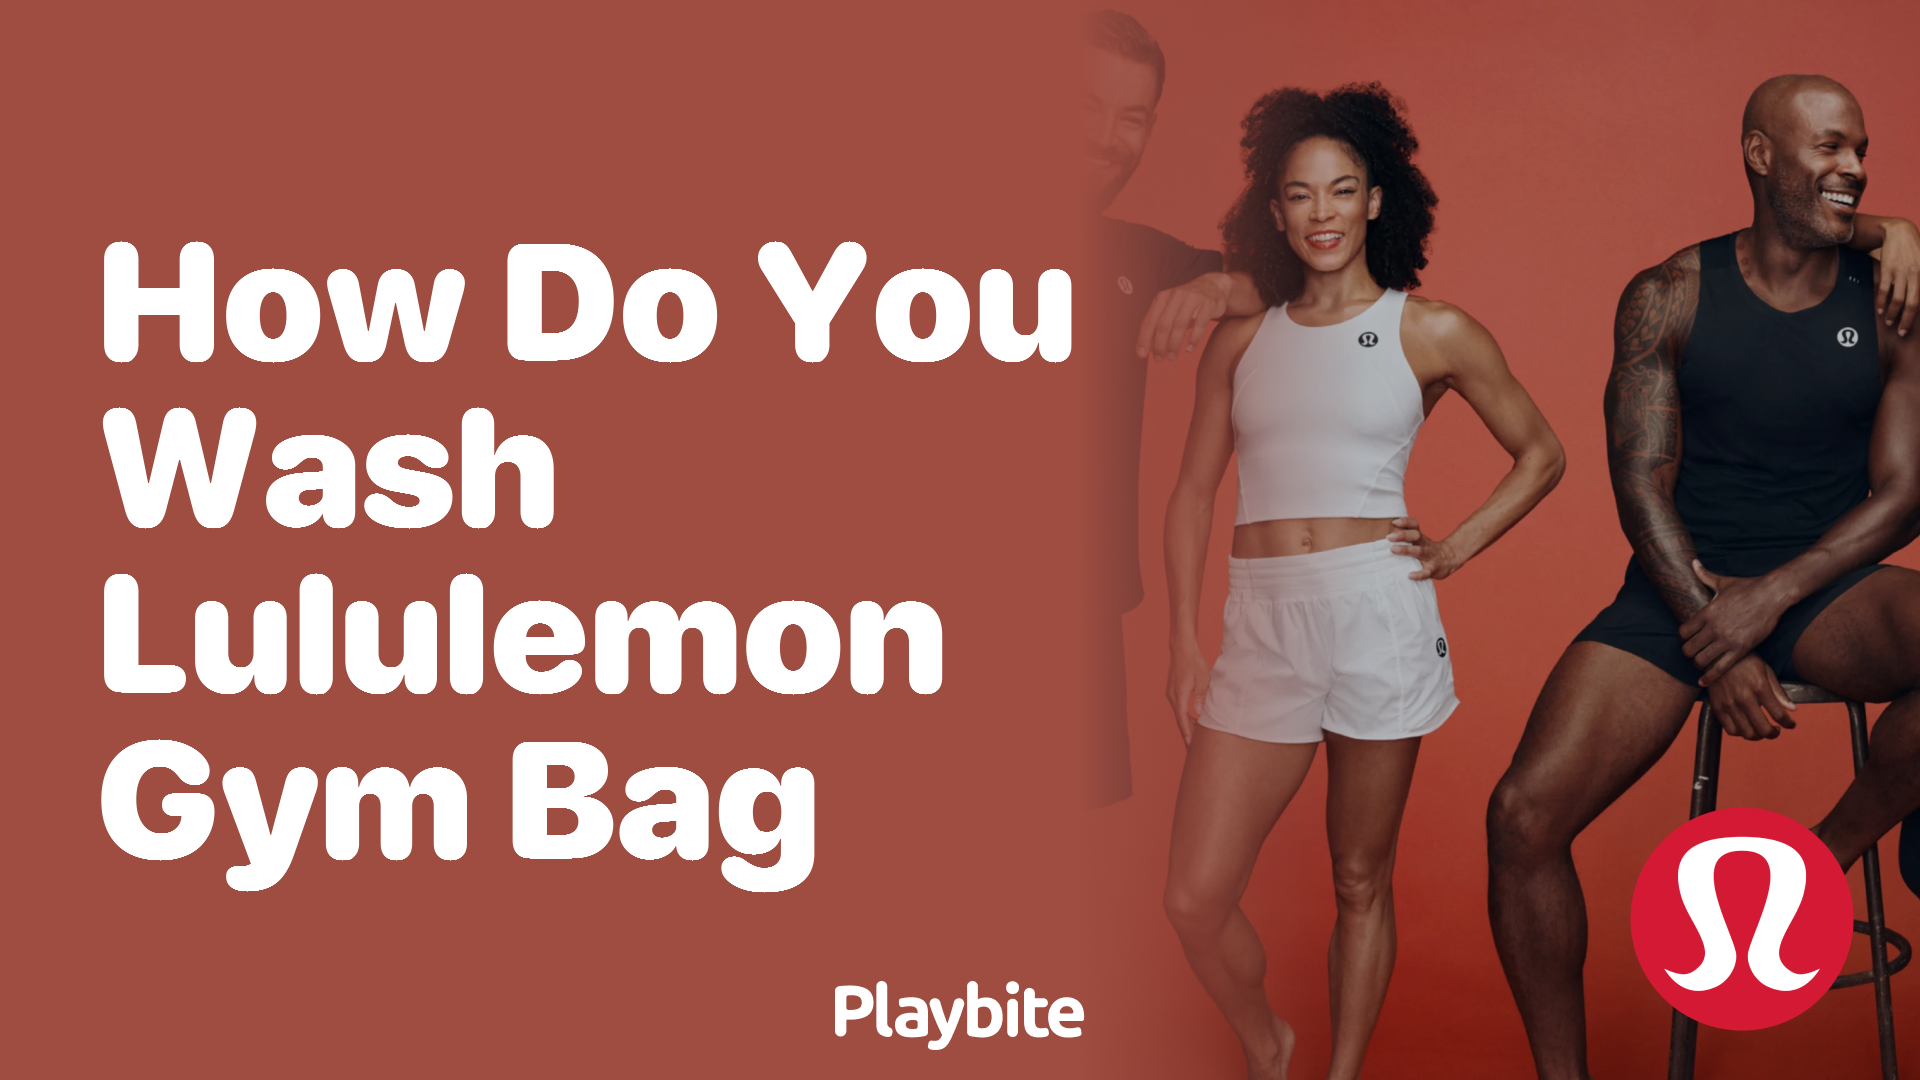 How Do You Wash Lululemon Gym Bag? - Playbite